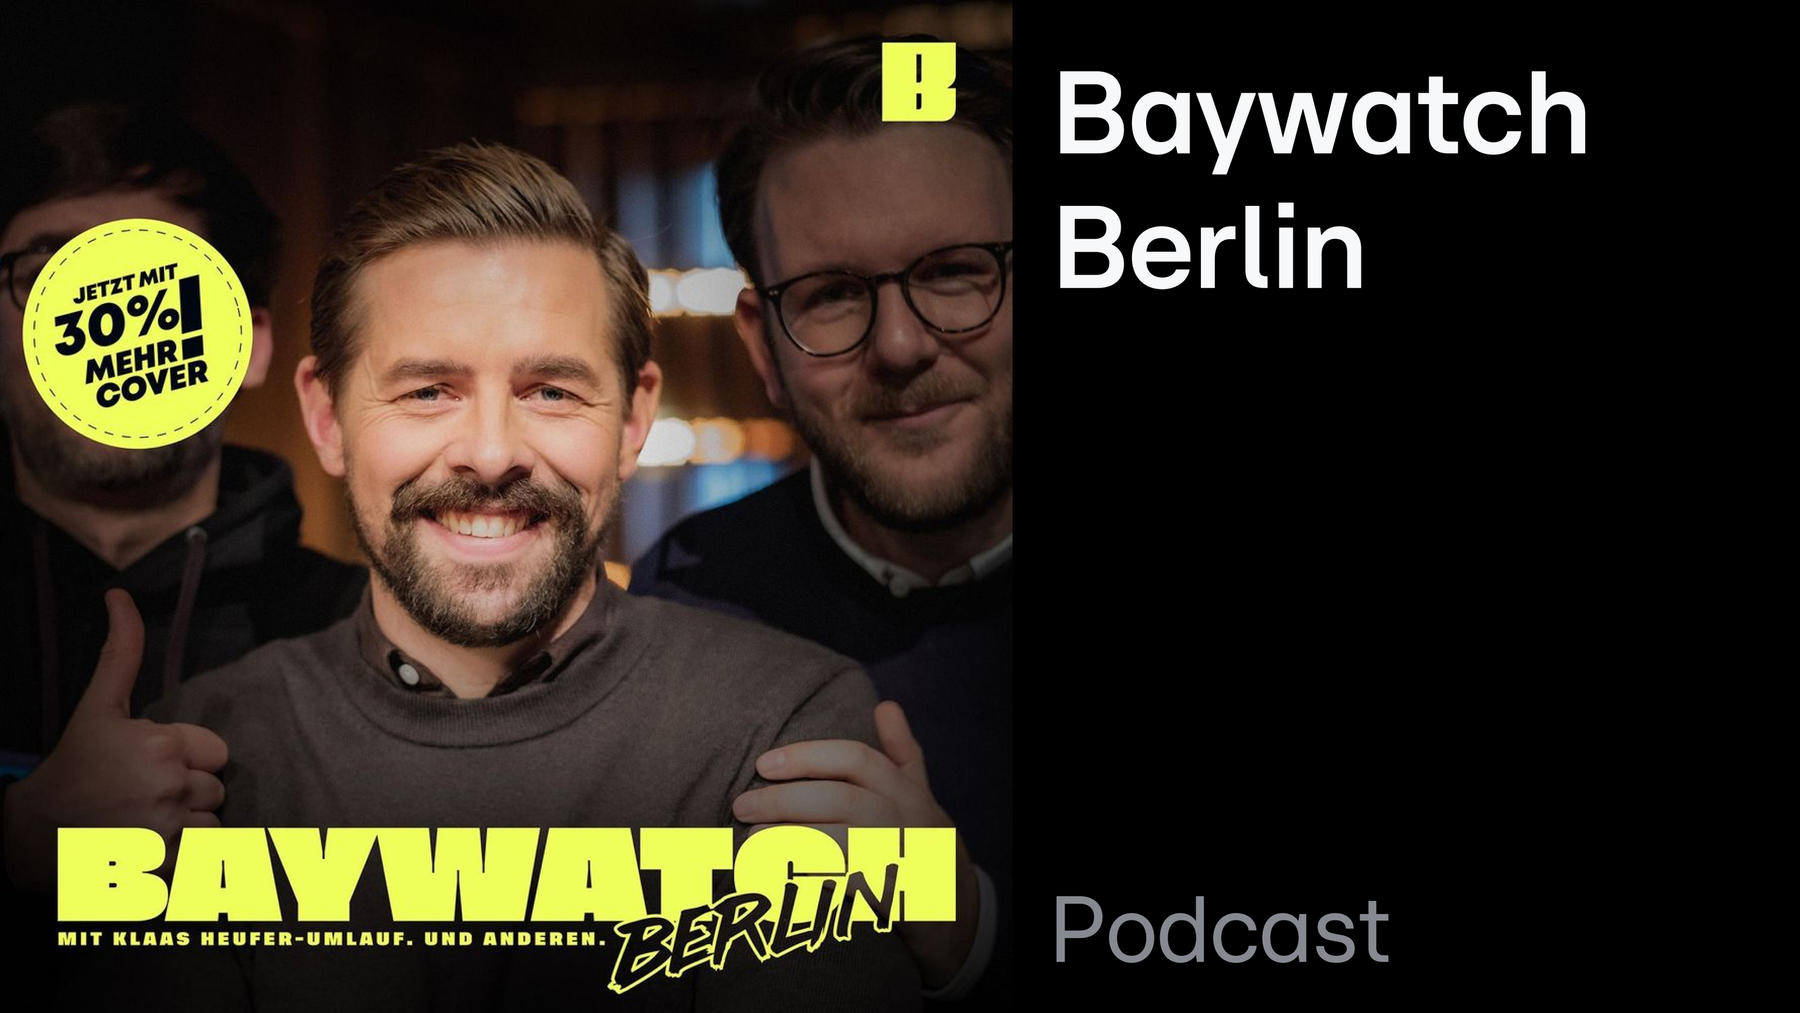 Podcast: Baywatch Berlin